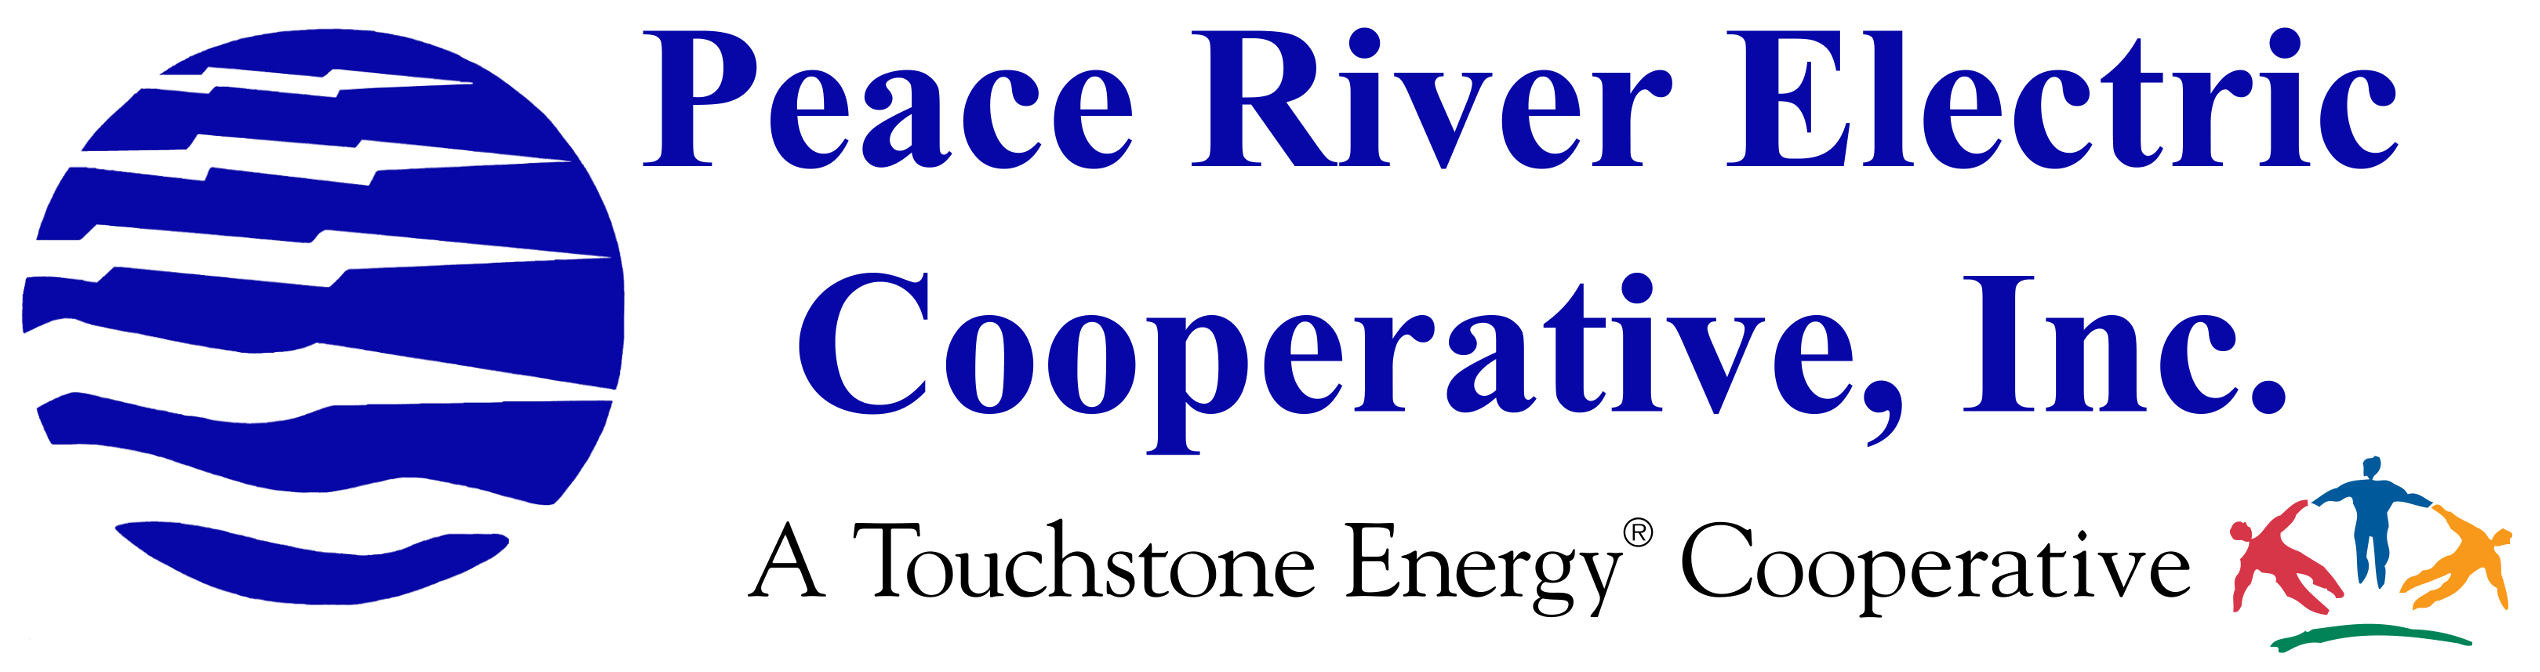 Peace River Electric Cooperative, Inc.